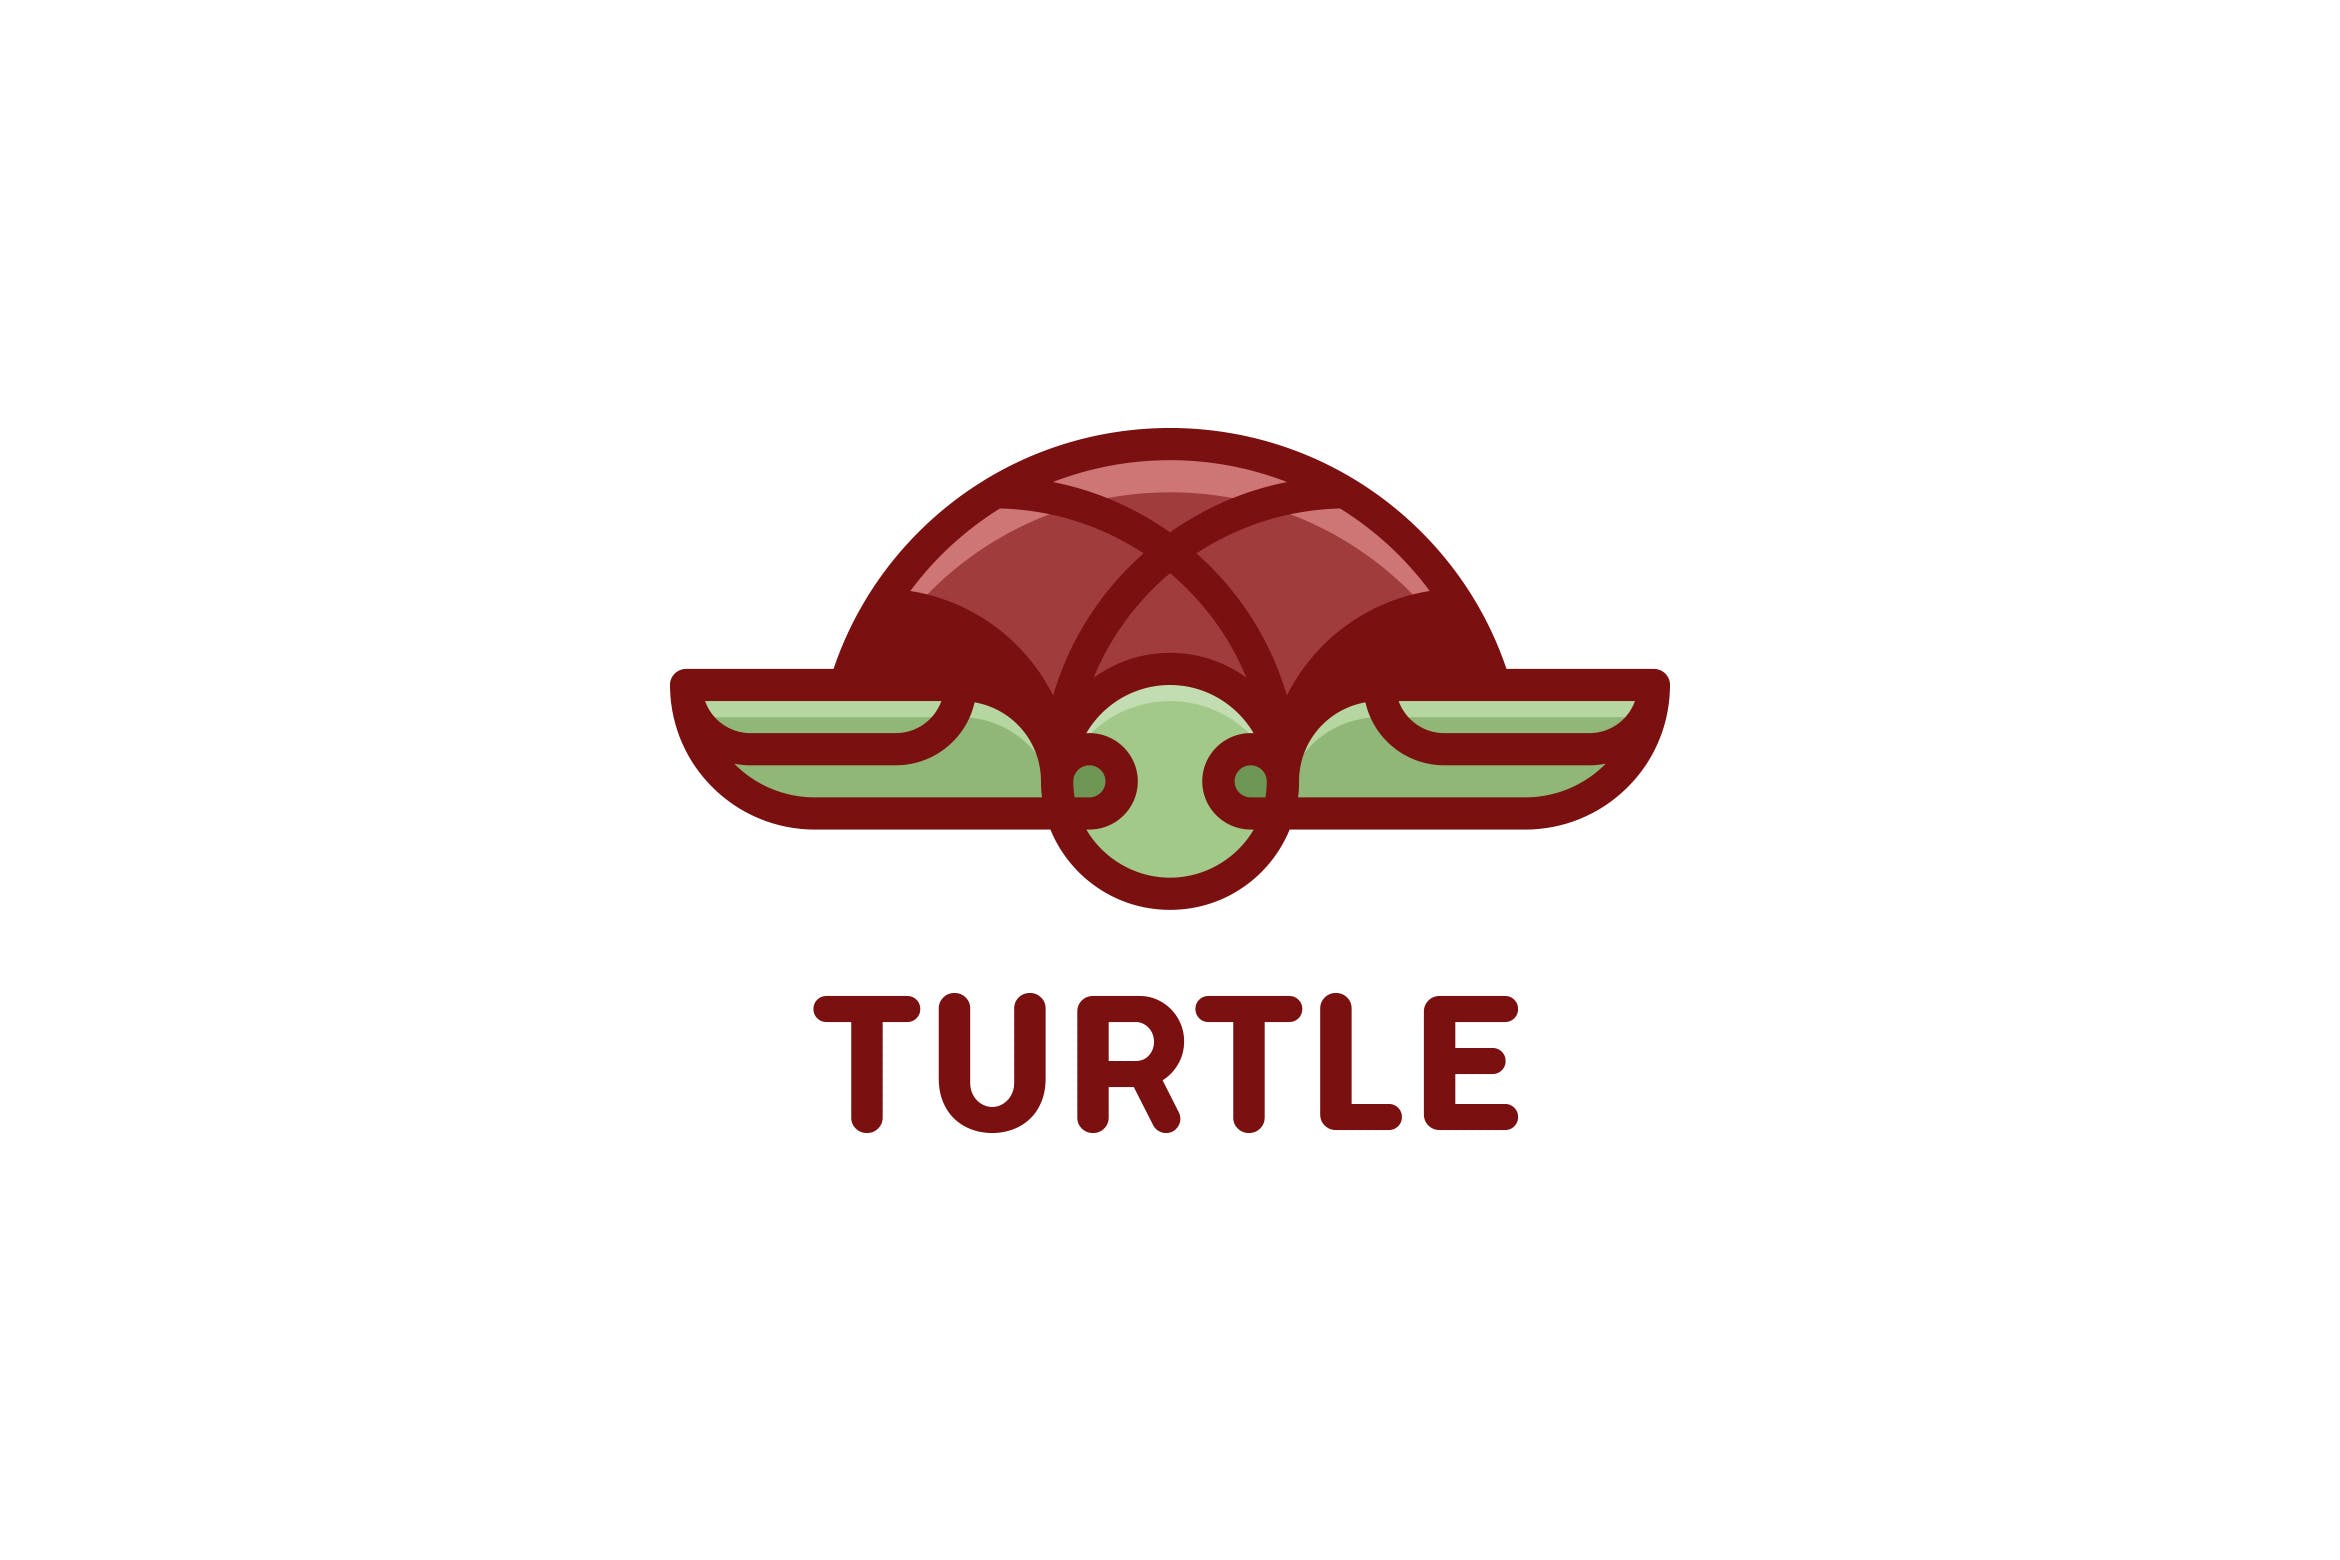 海龟乌龟图形品牌Logo设计模板 Turtle插图